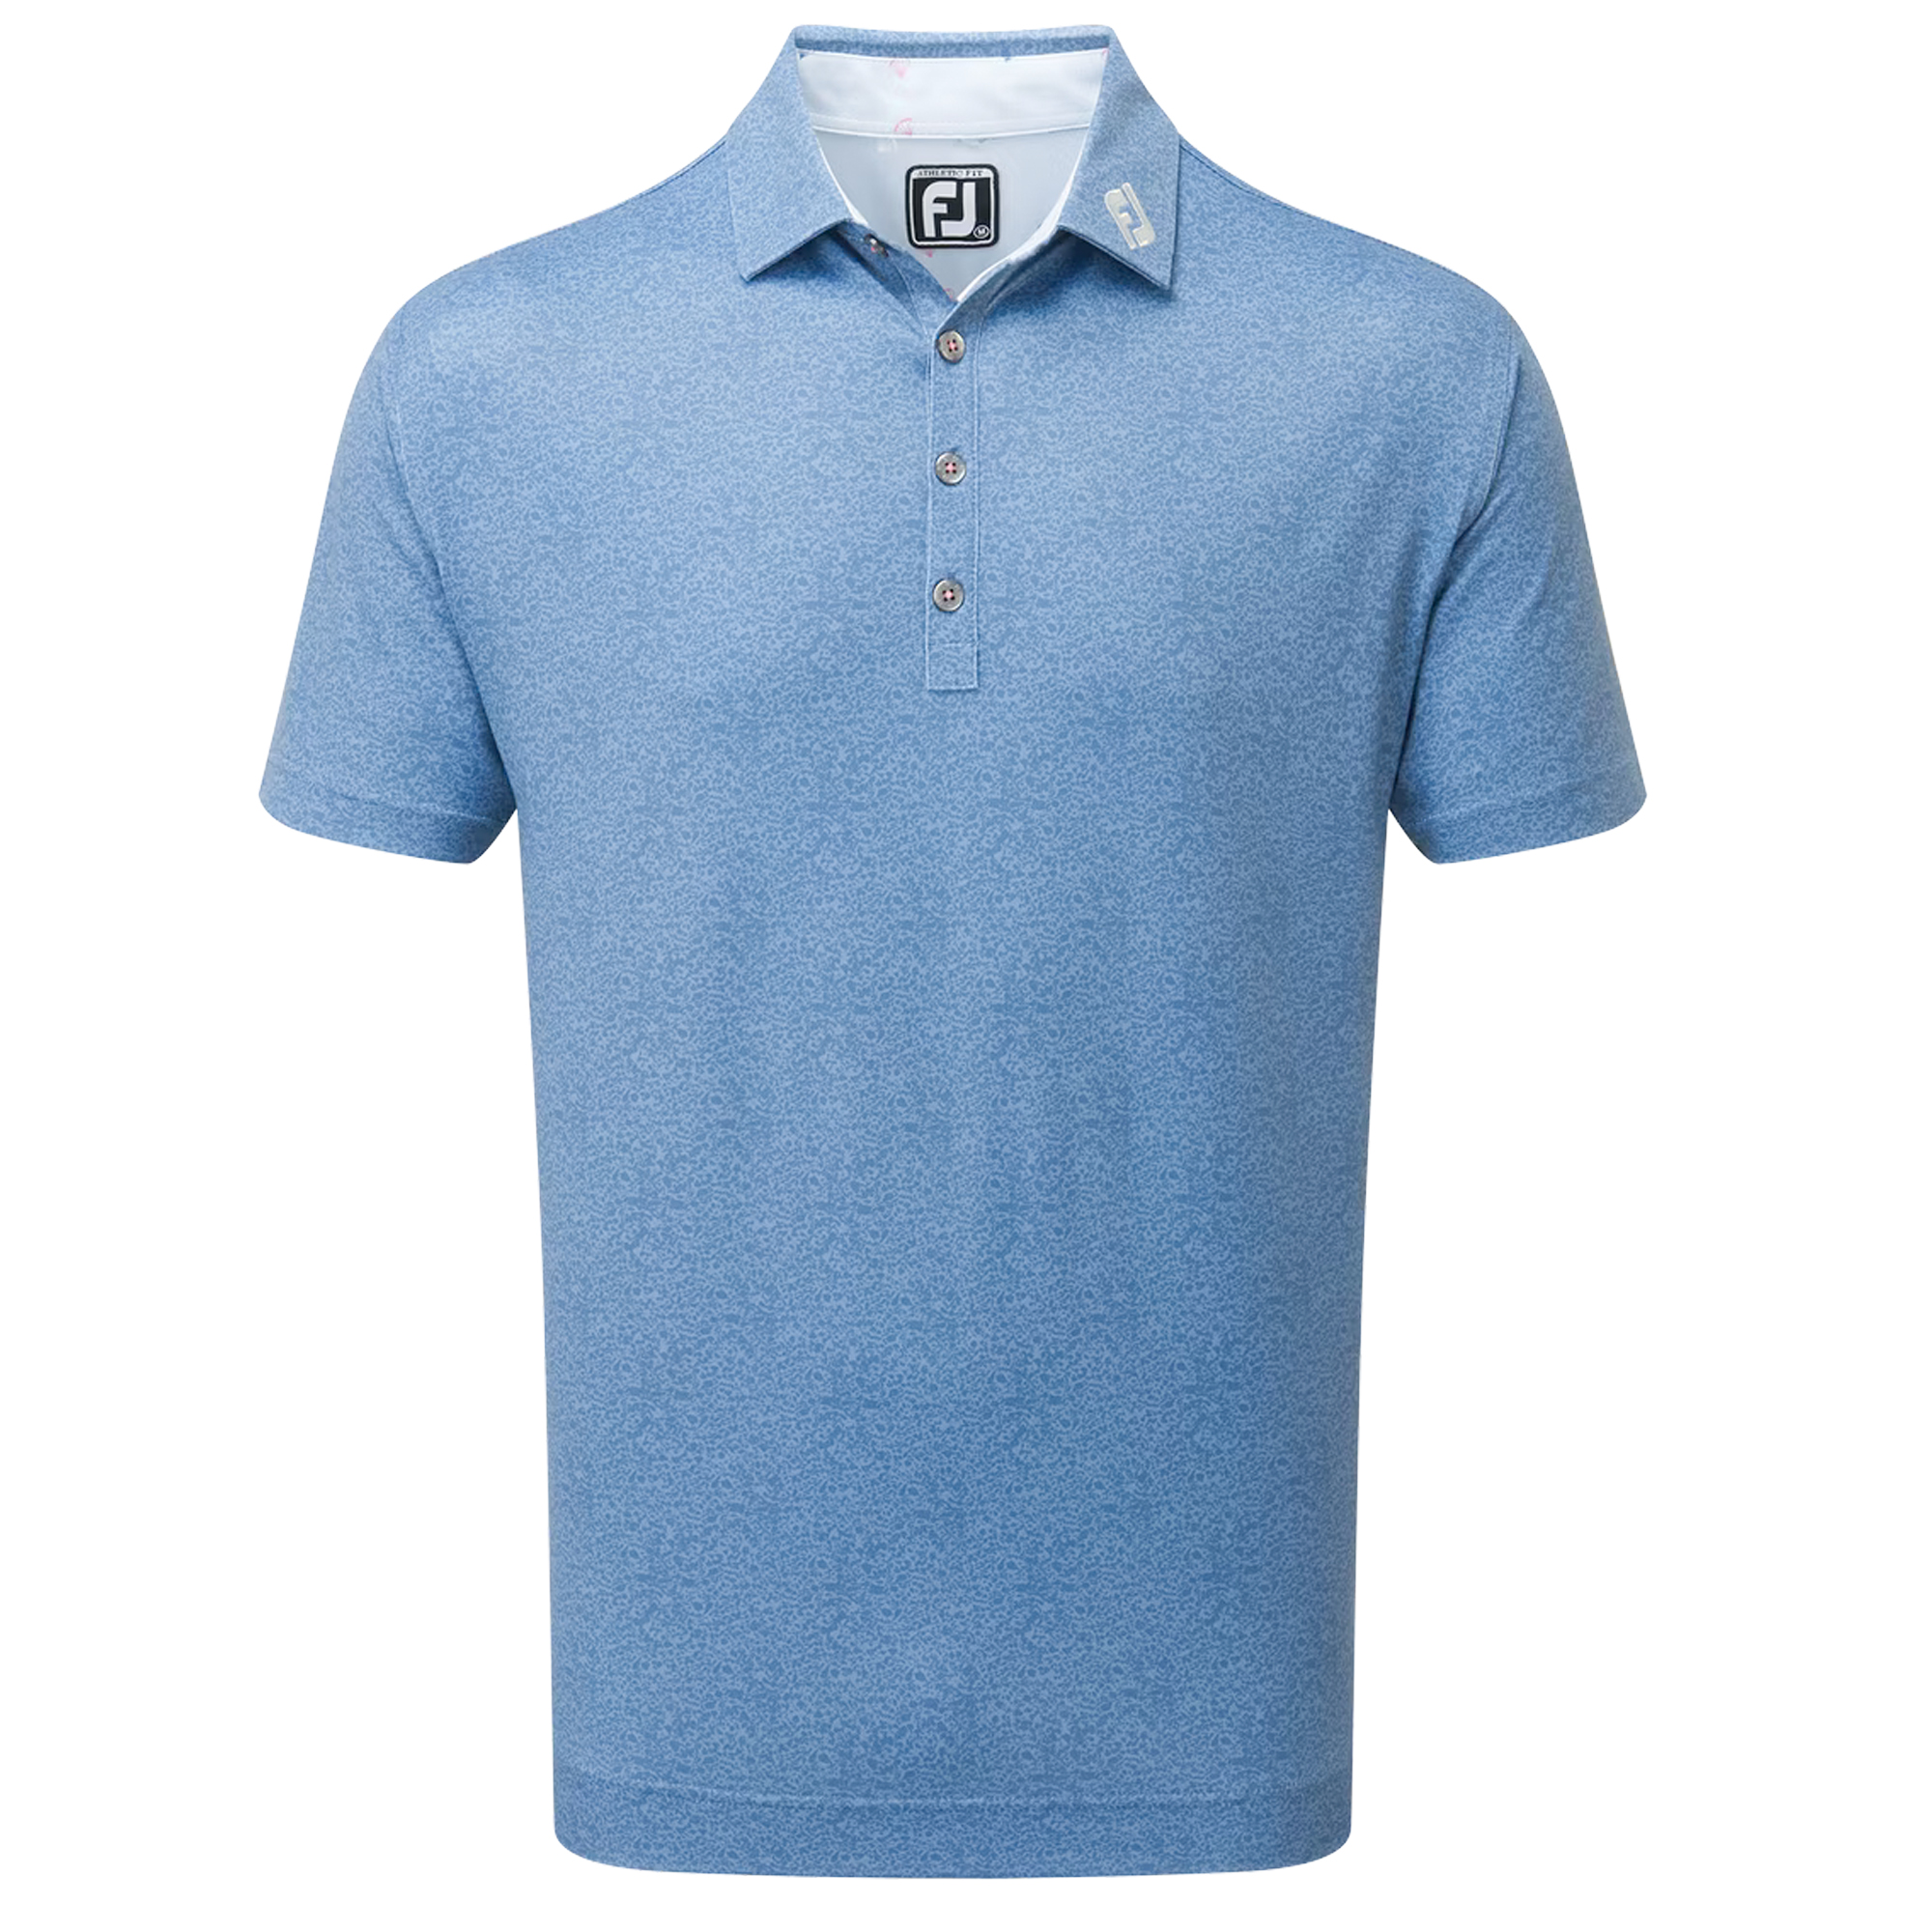 FootJoy EU Texture Print With Parachute Trim Mens Golf Polo Shirt  - Sapphire